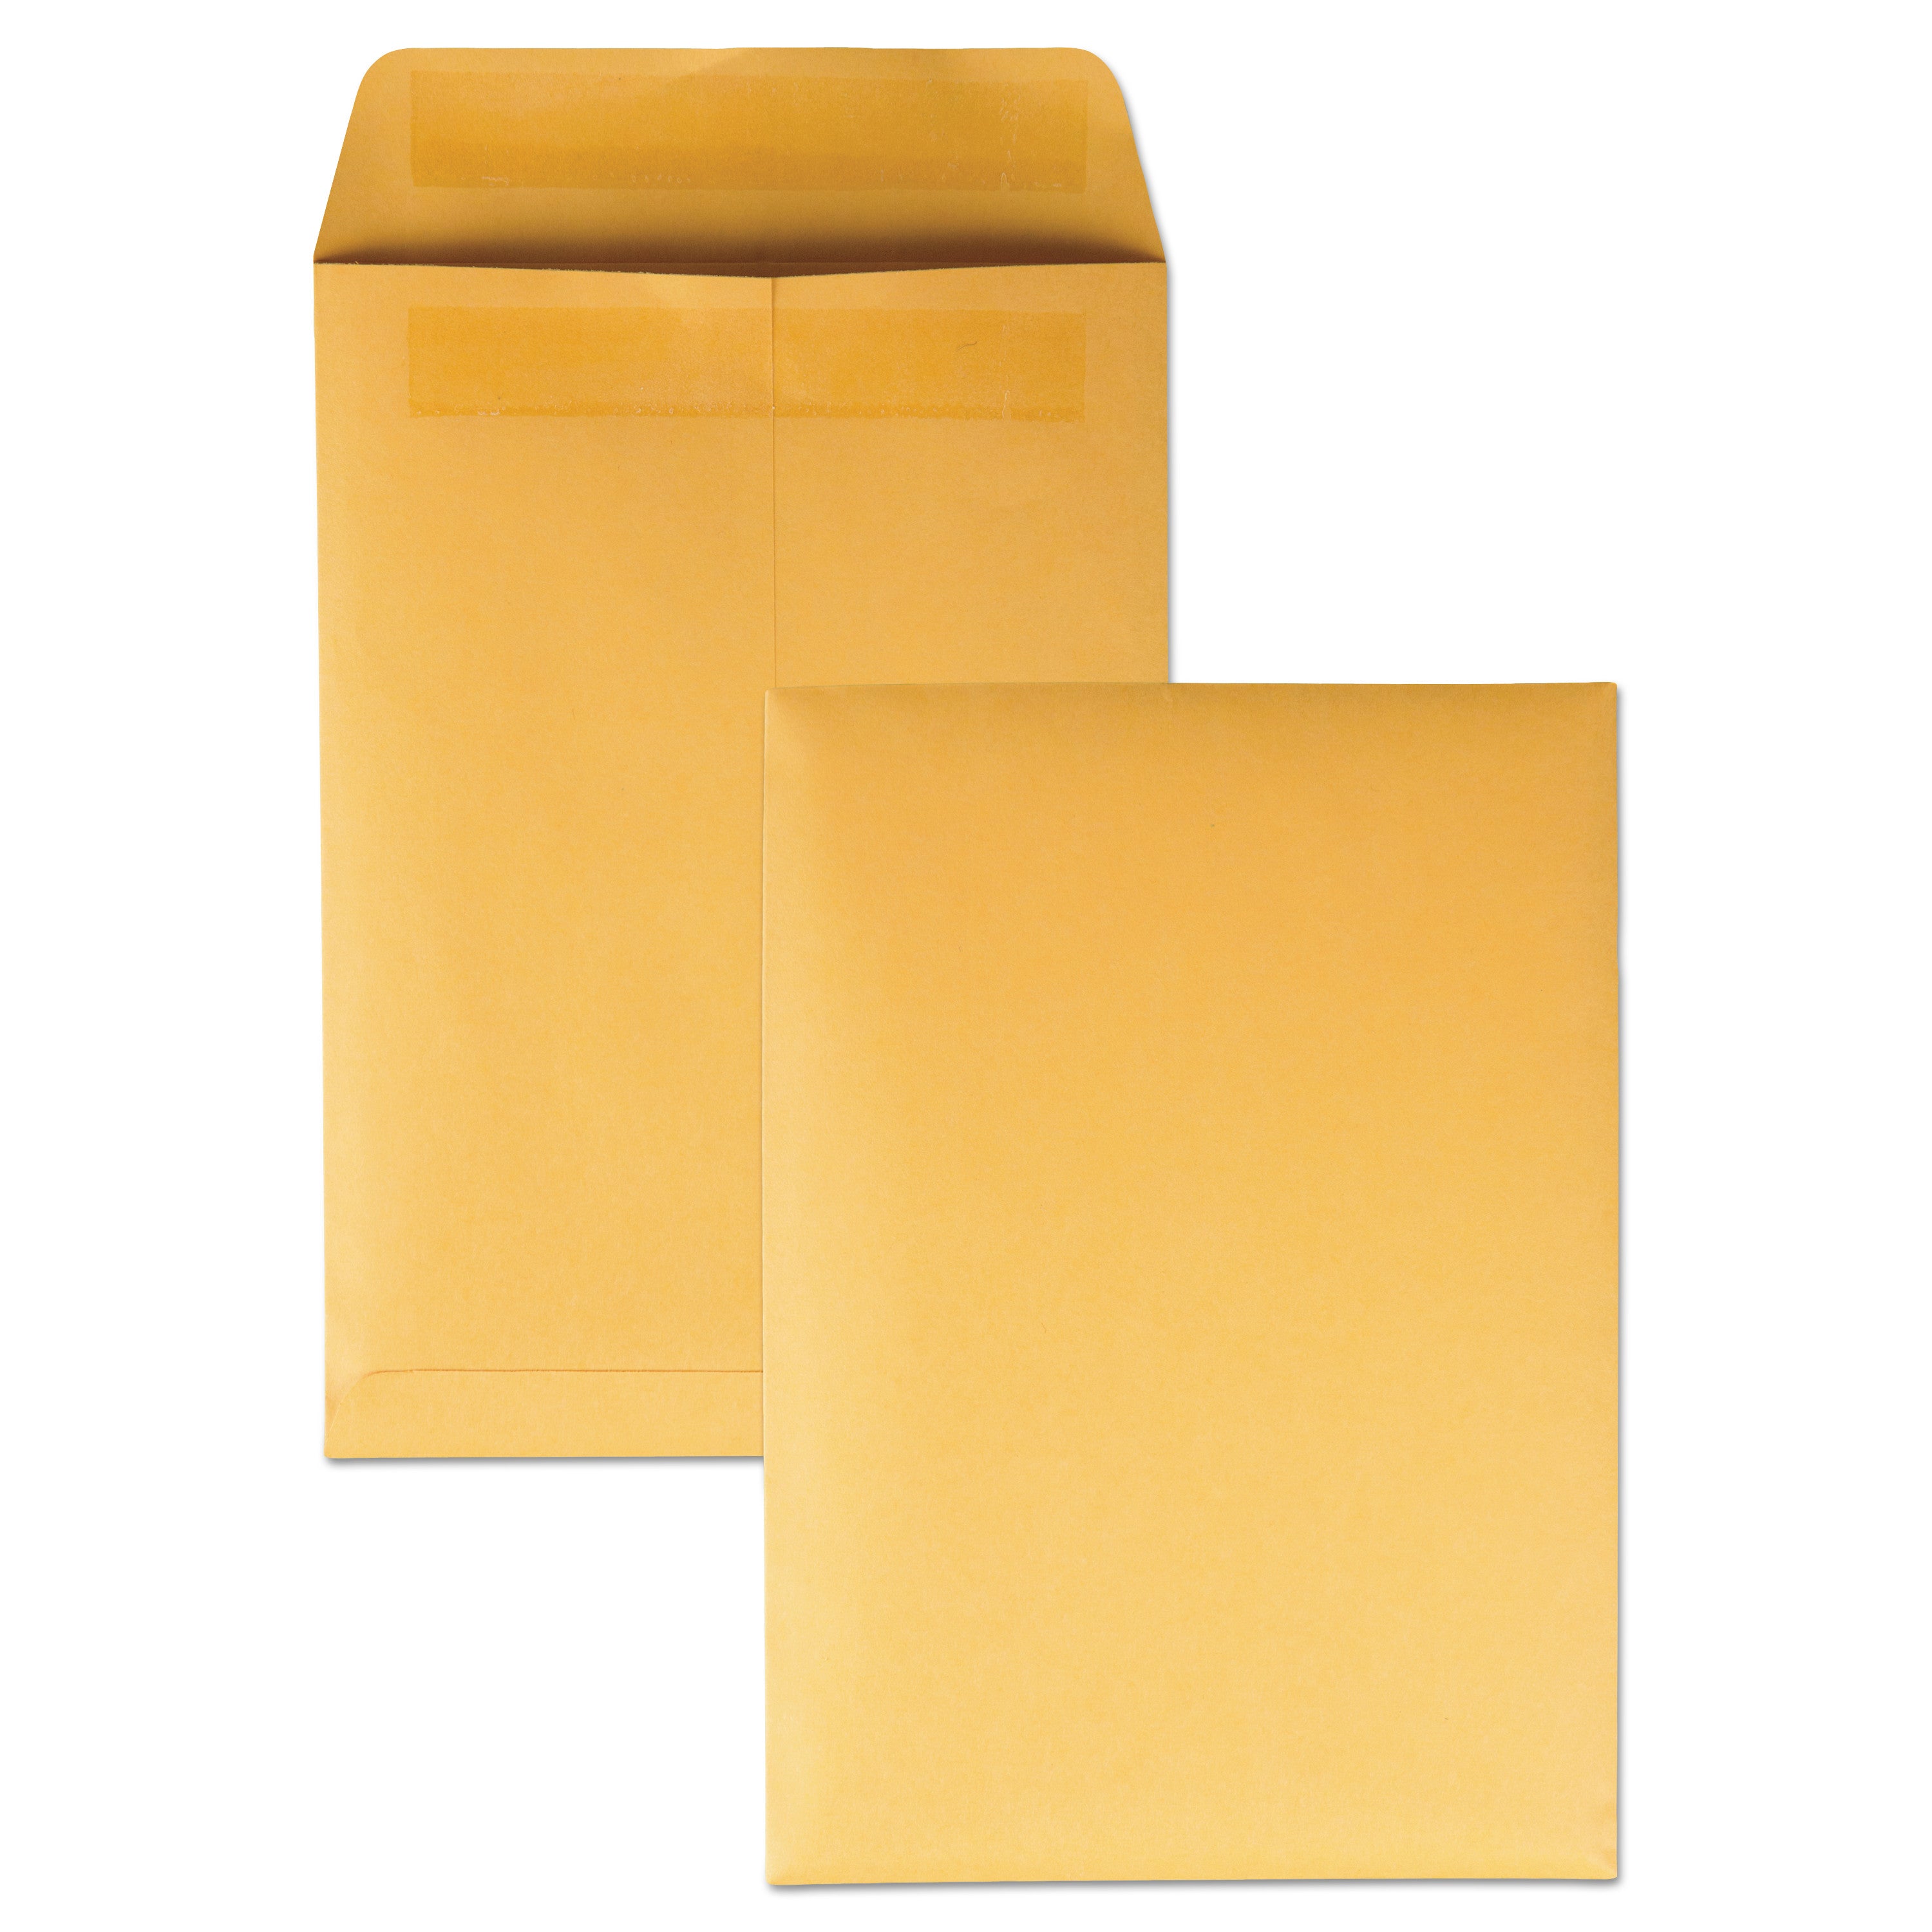 Redi-Seal Catalog Envelope, #6, Cheese Blade Flap, Redi-Seal Adhesive Closure, 7.5 x 10.5, Brown Kraft, 250/Box - 